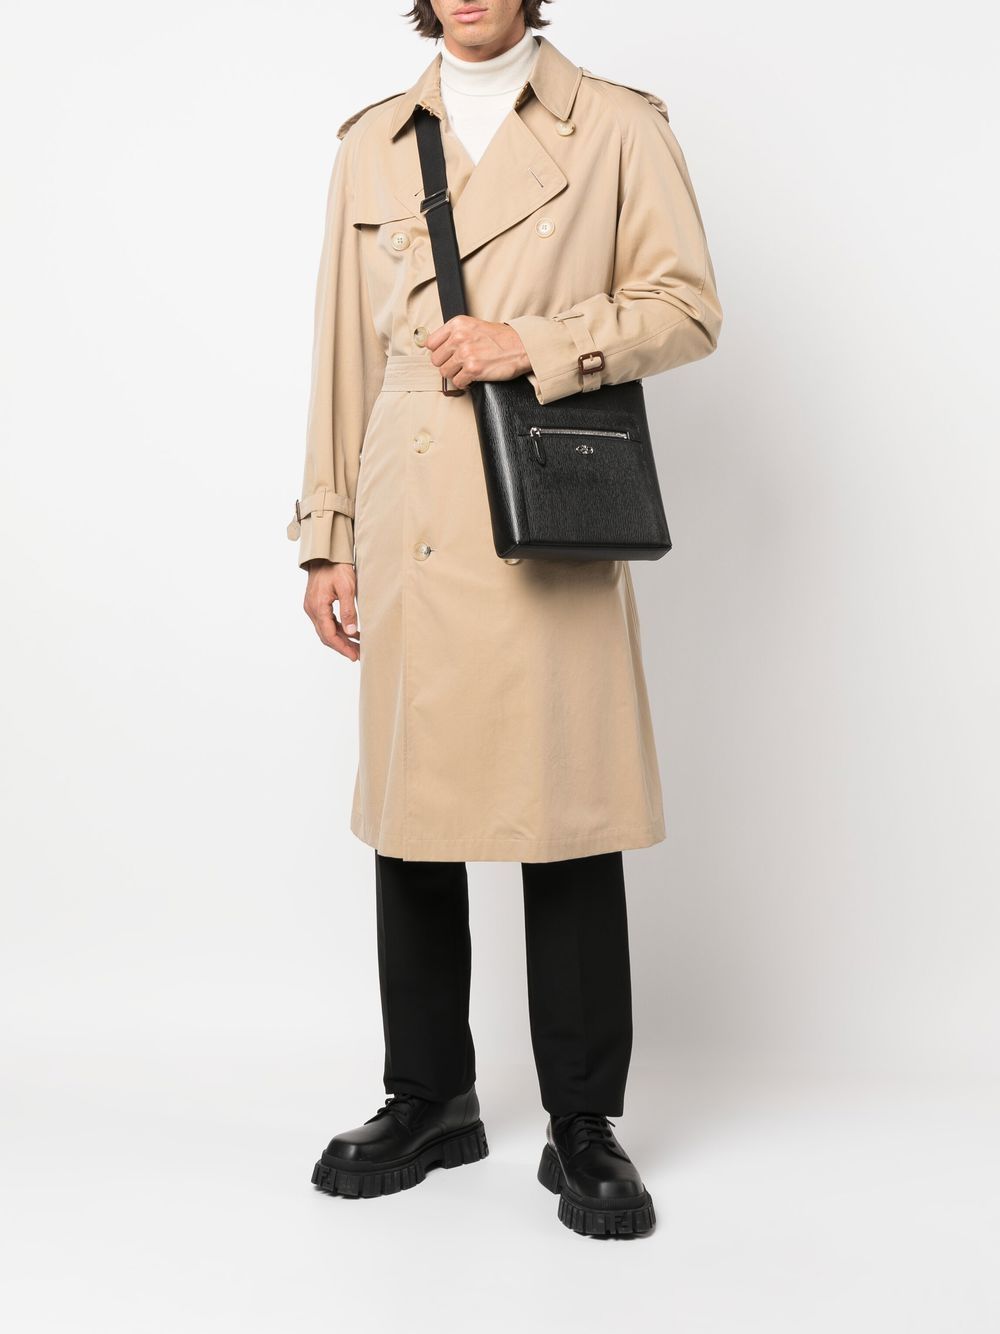 Shop Ferragamo Sleek And Stylish Black Leather Crossbody Handbag For Men